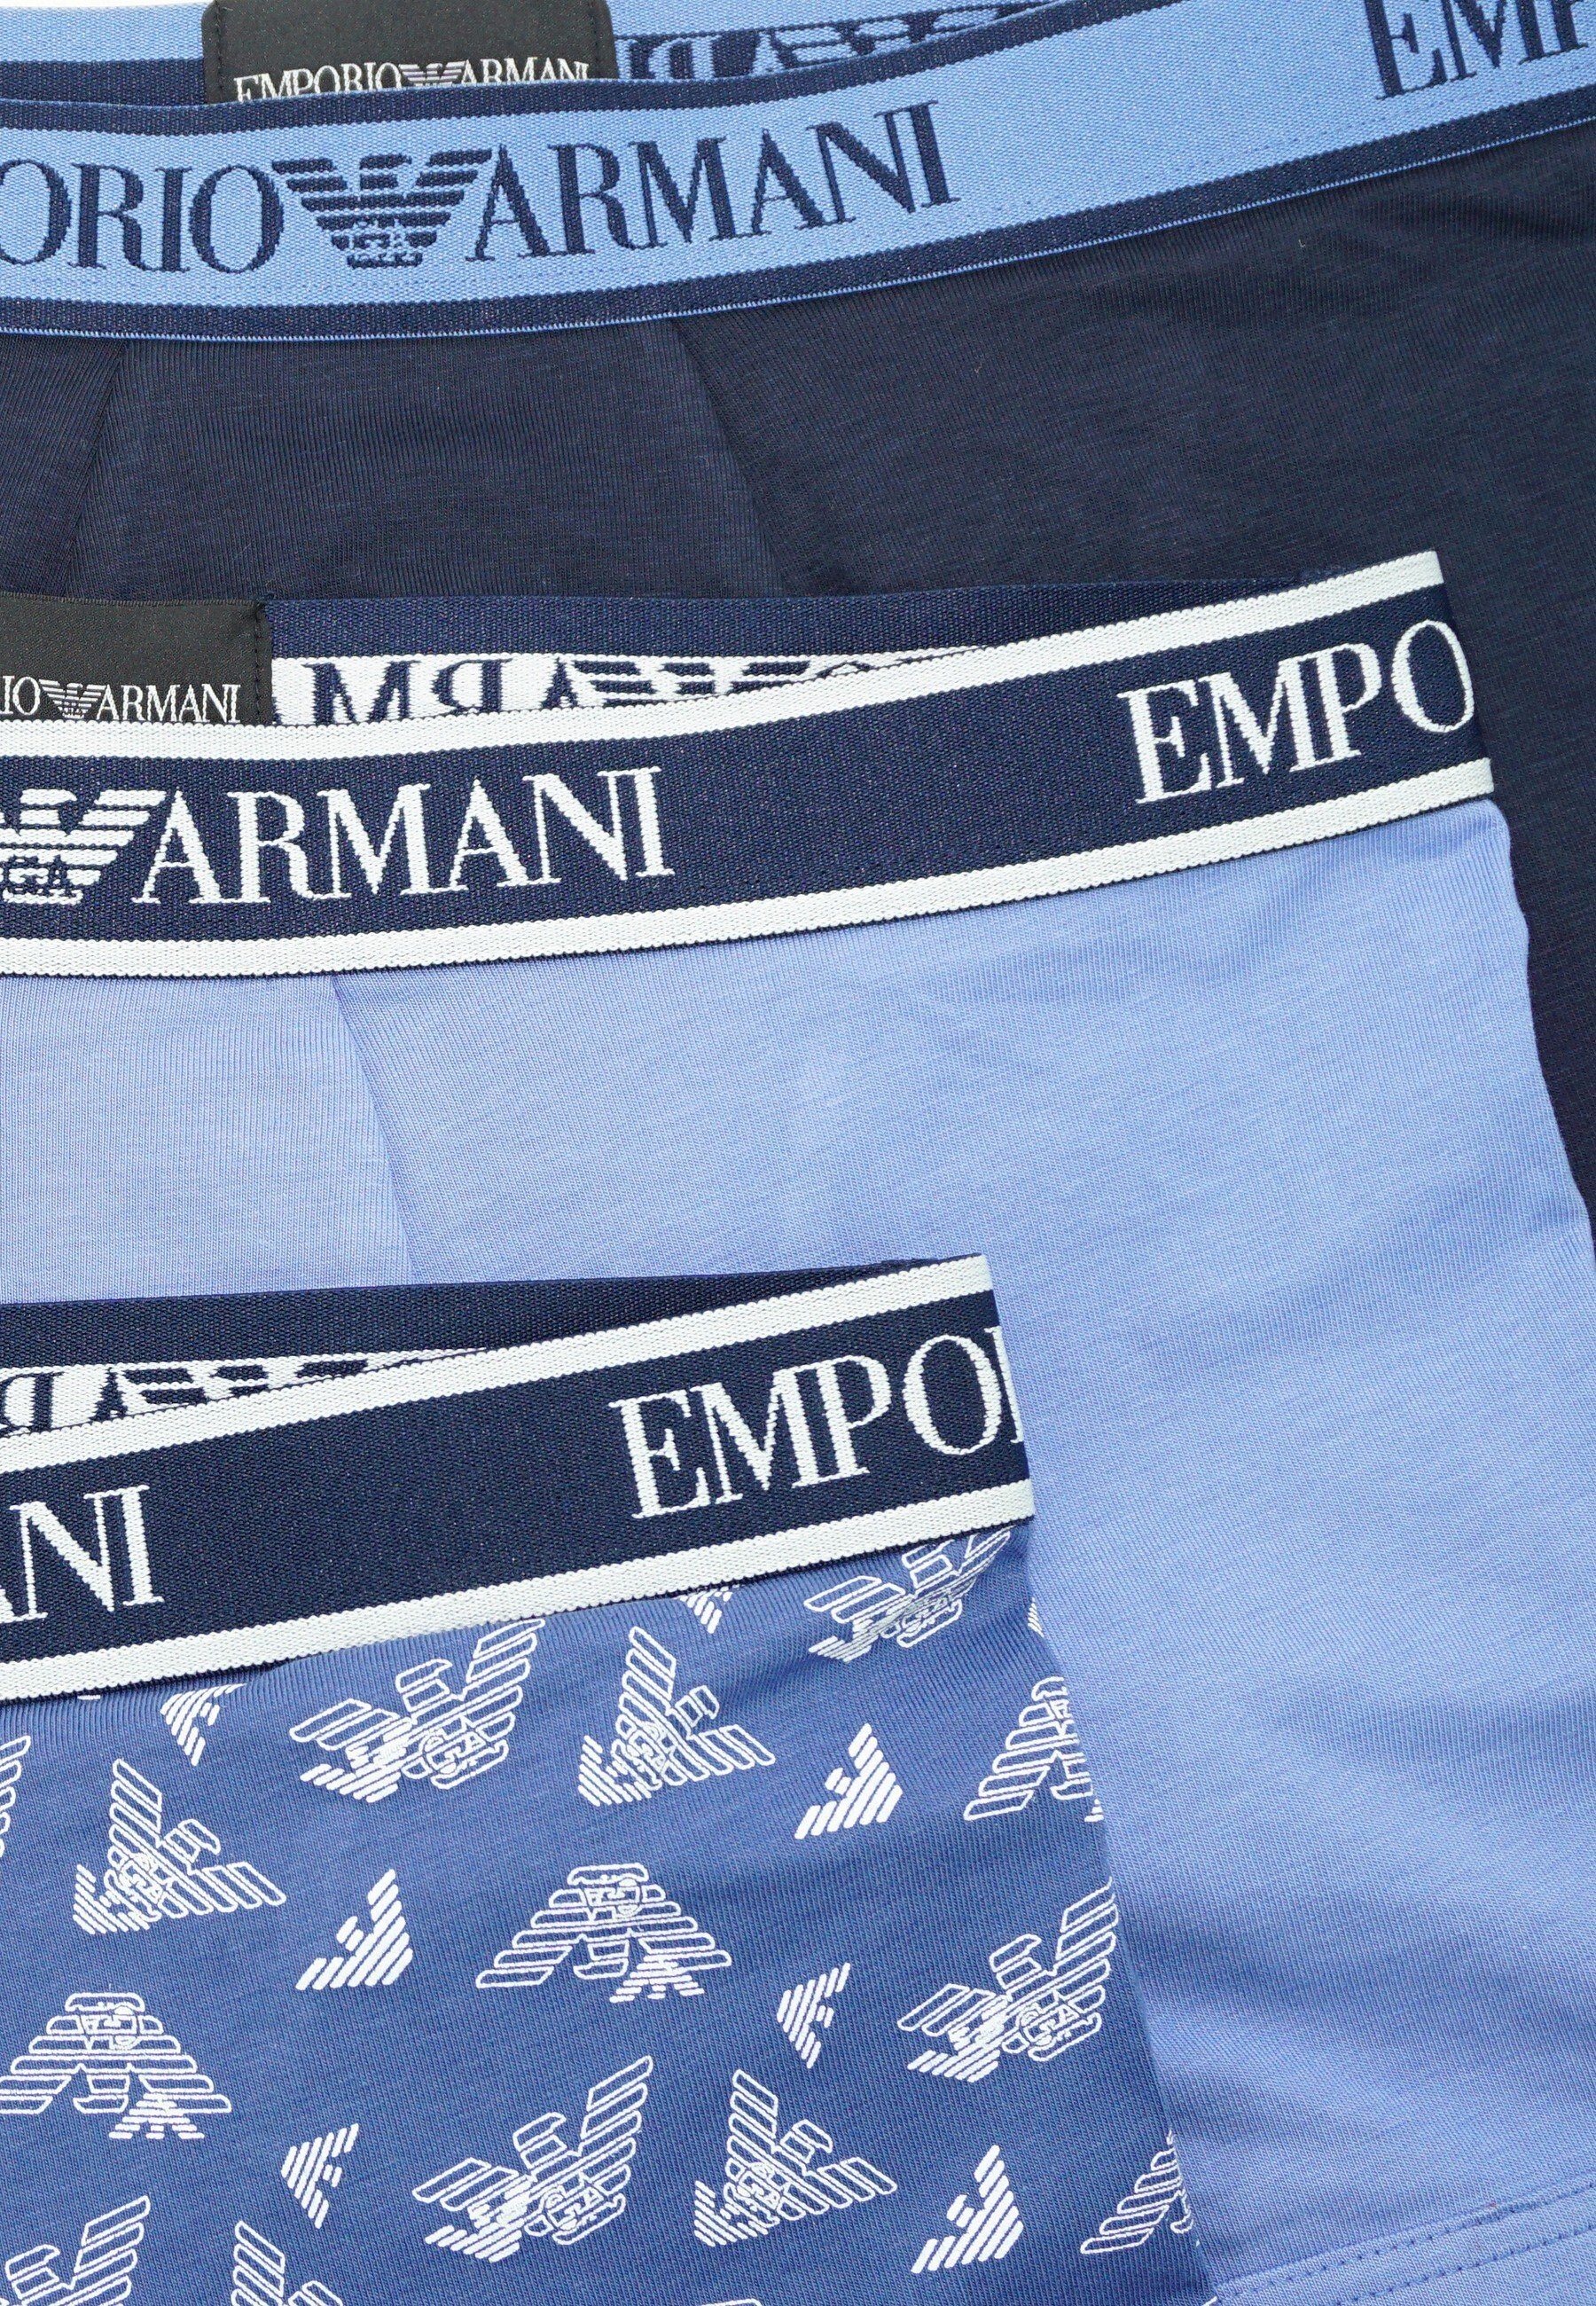 Blau Boxershorts Emporio Armani Trunks Shorts (3-St) Knit Pack 3